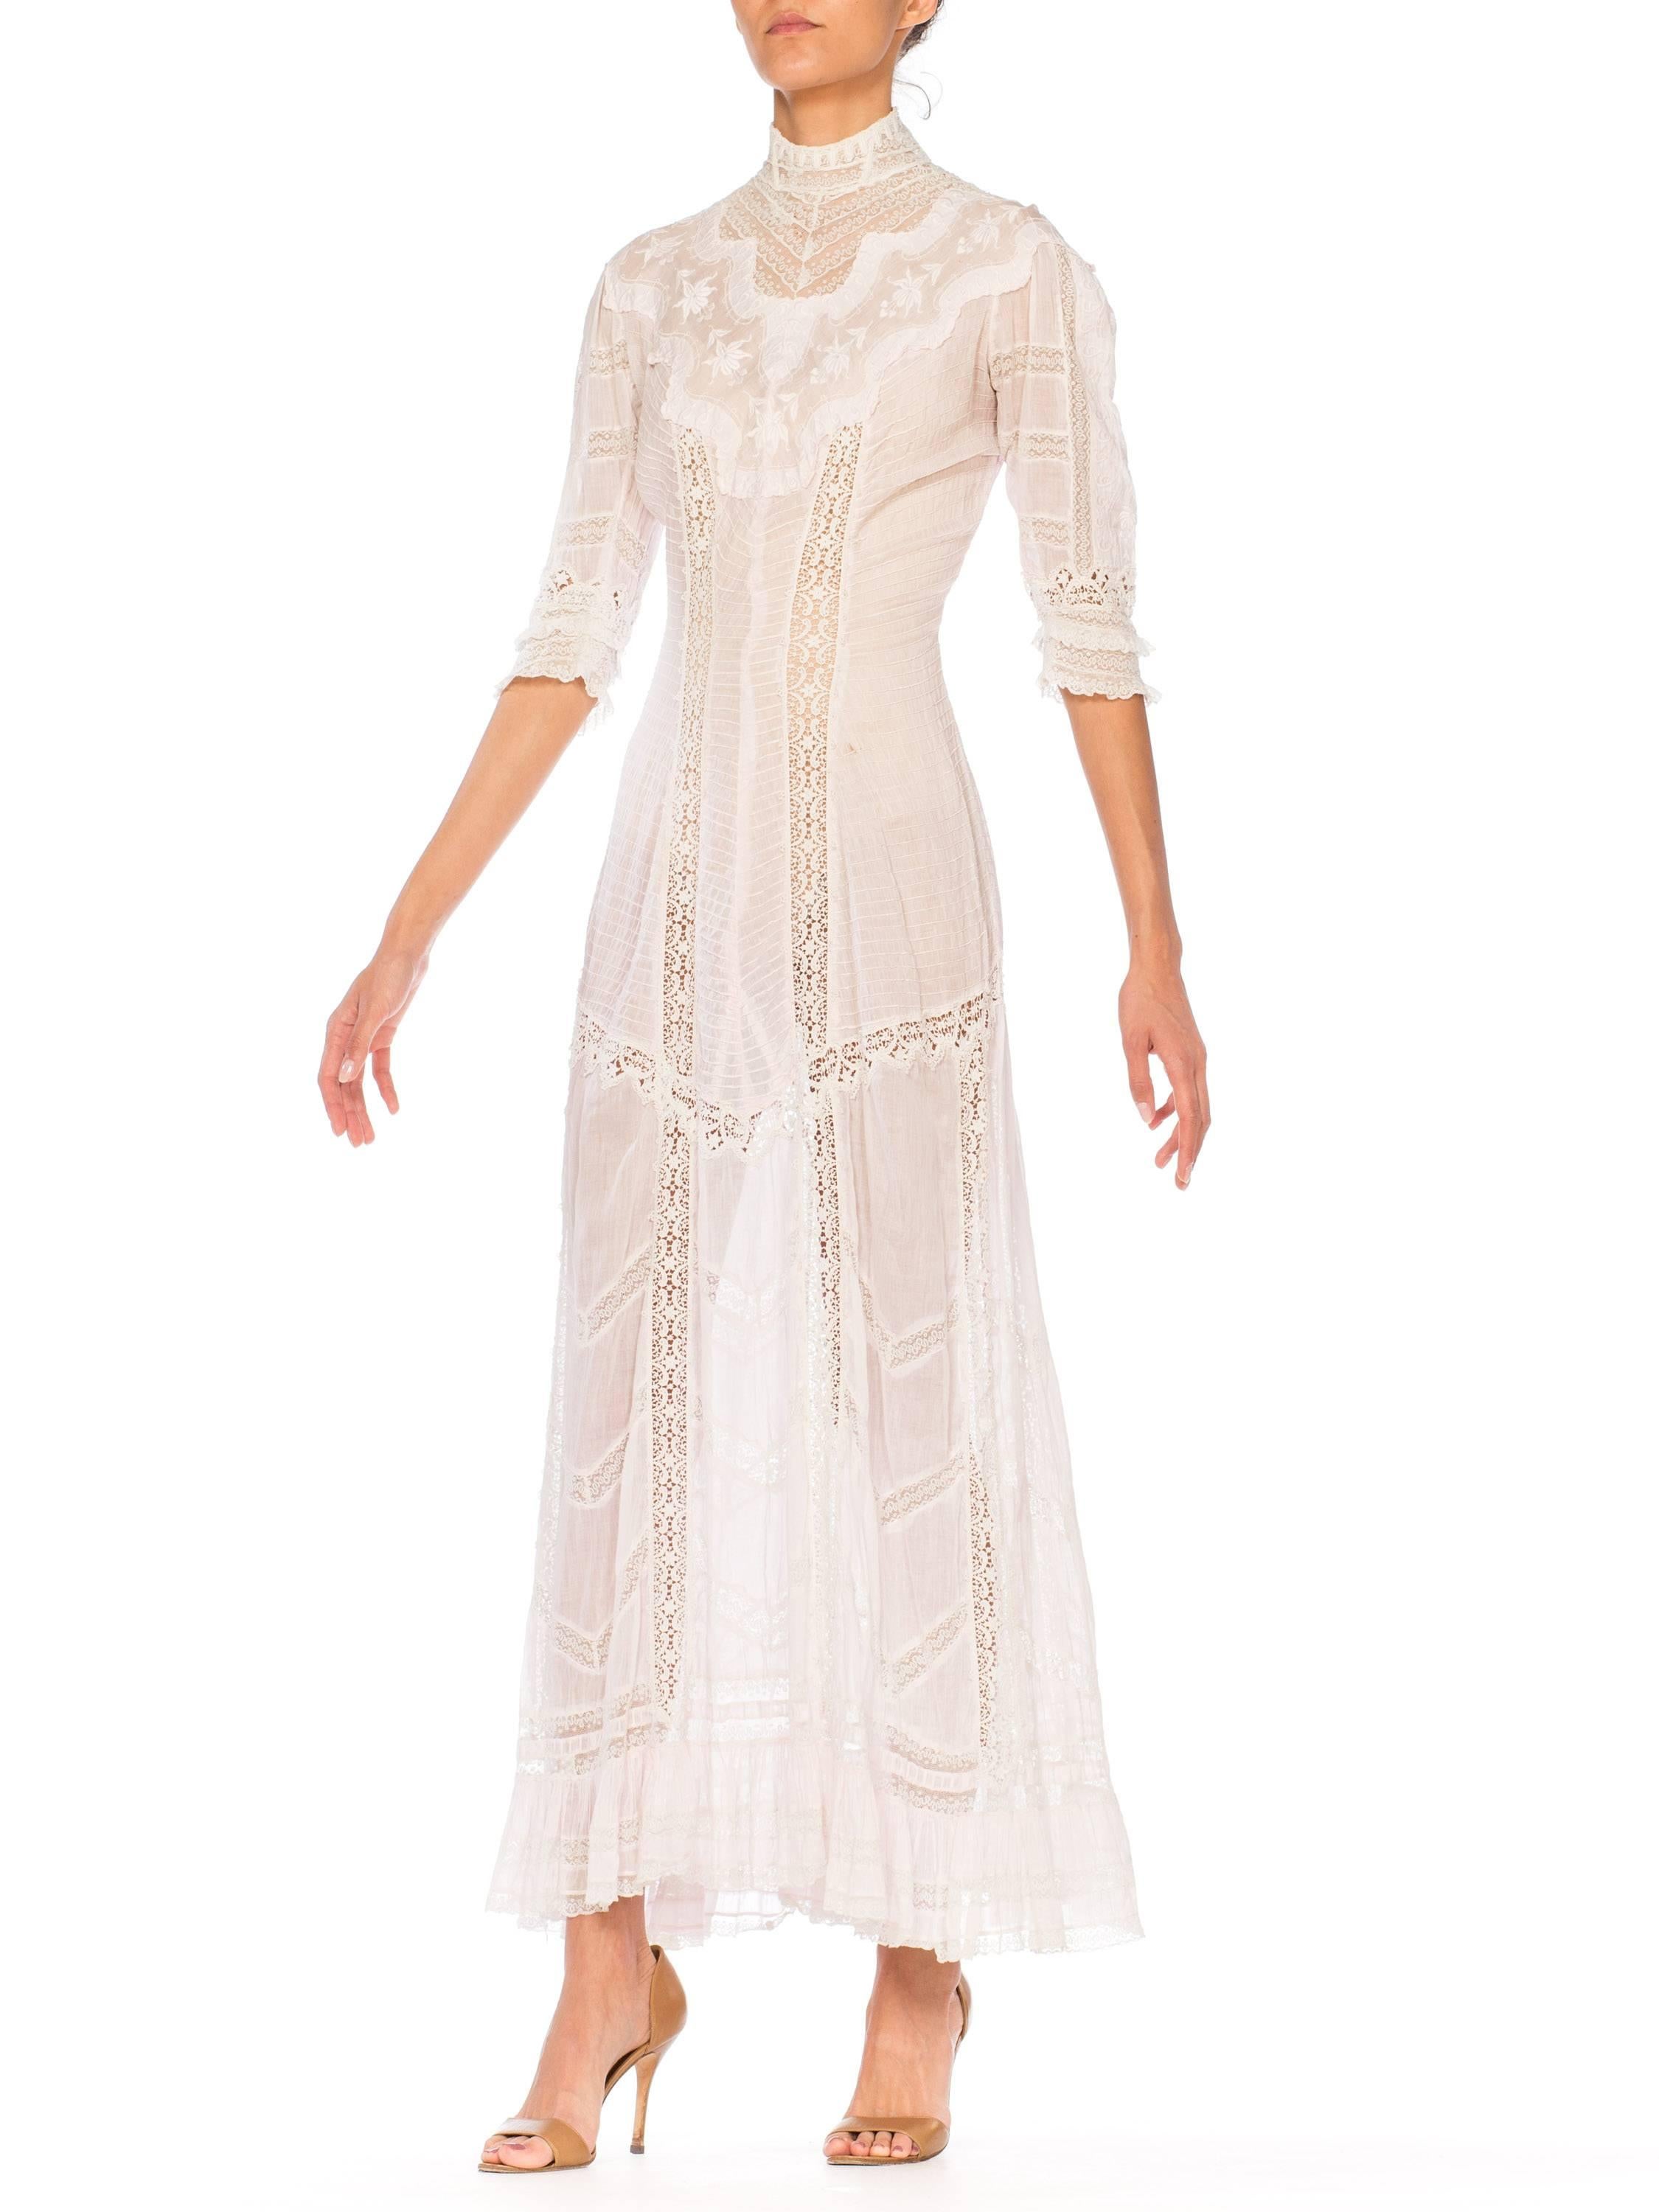 Belle Epoque Swan Neck Princess Line Victorian Organic Cotton and Lace Tea Dress 2